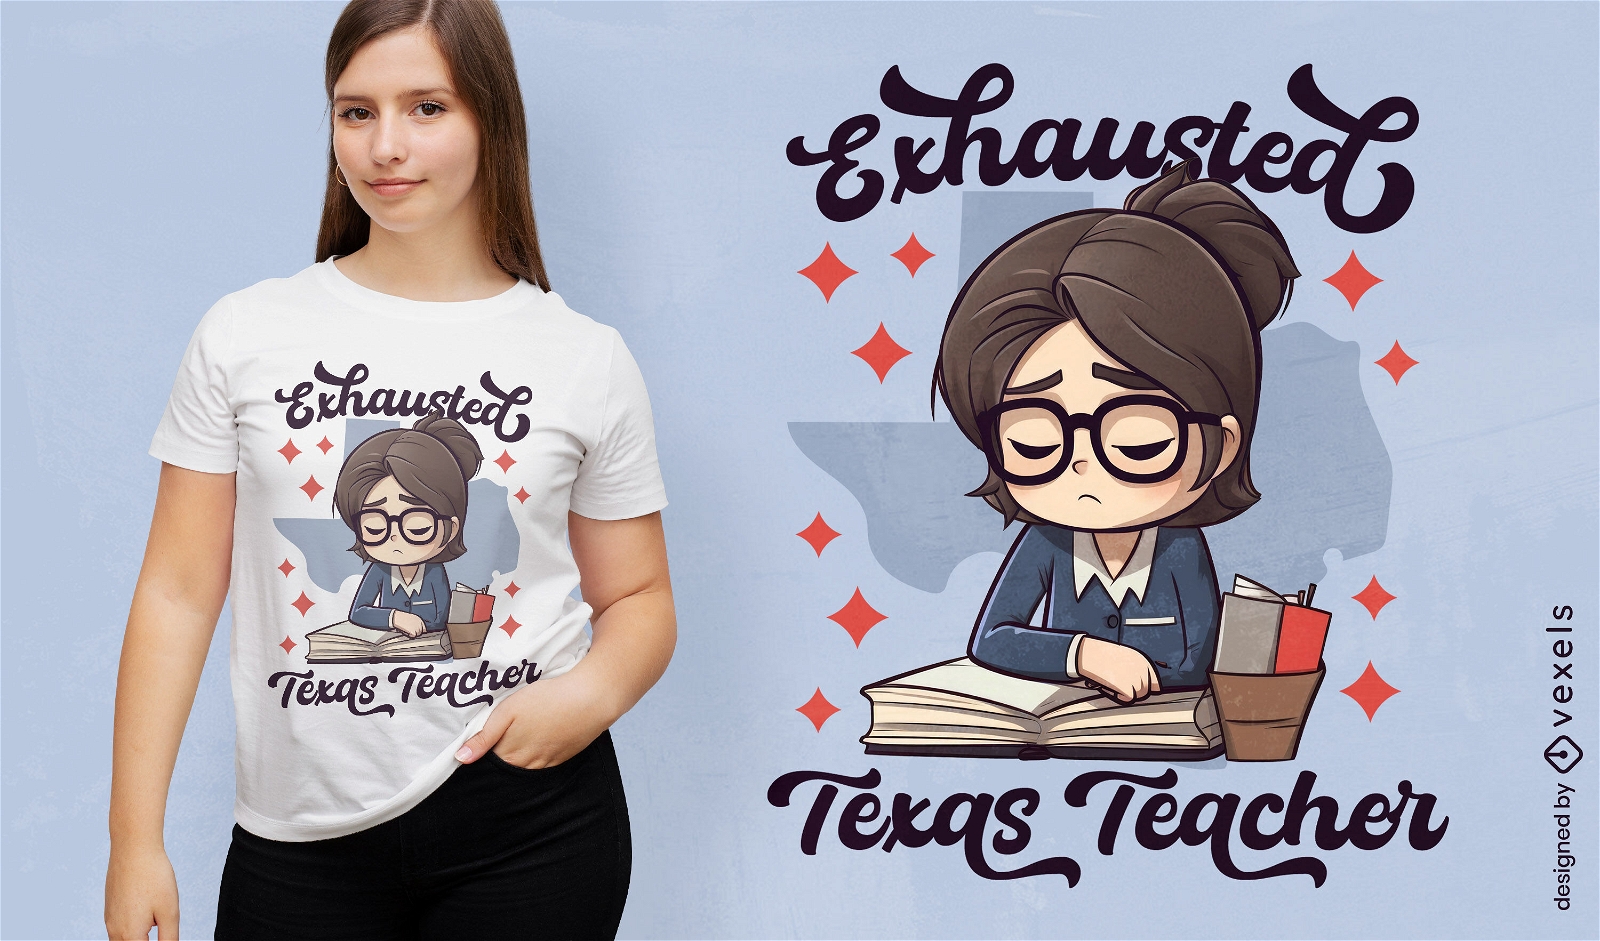 Tired teacher in Texas t-shirt design